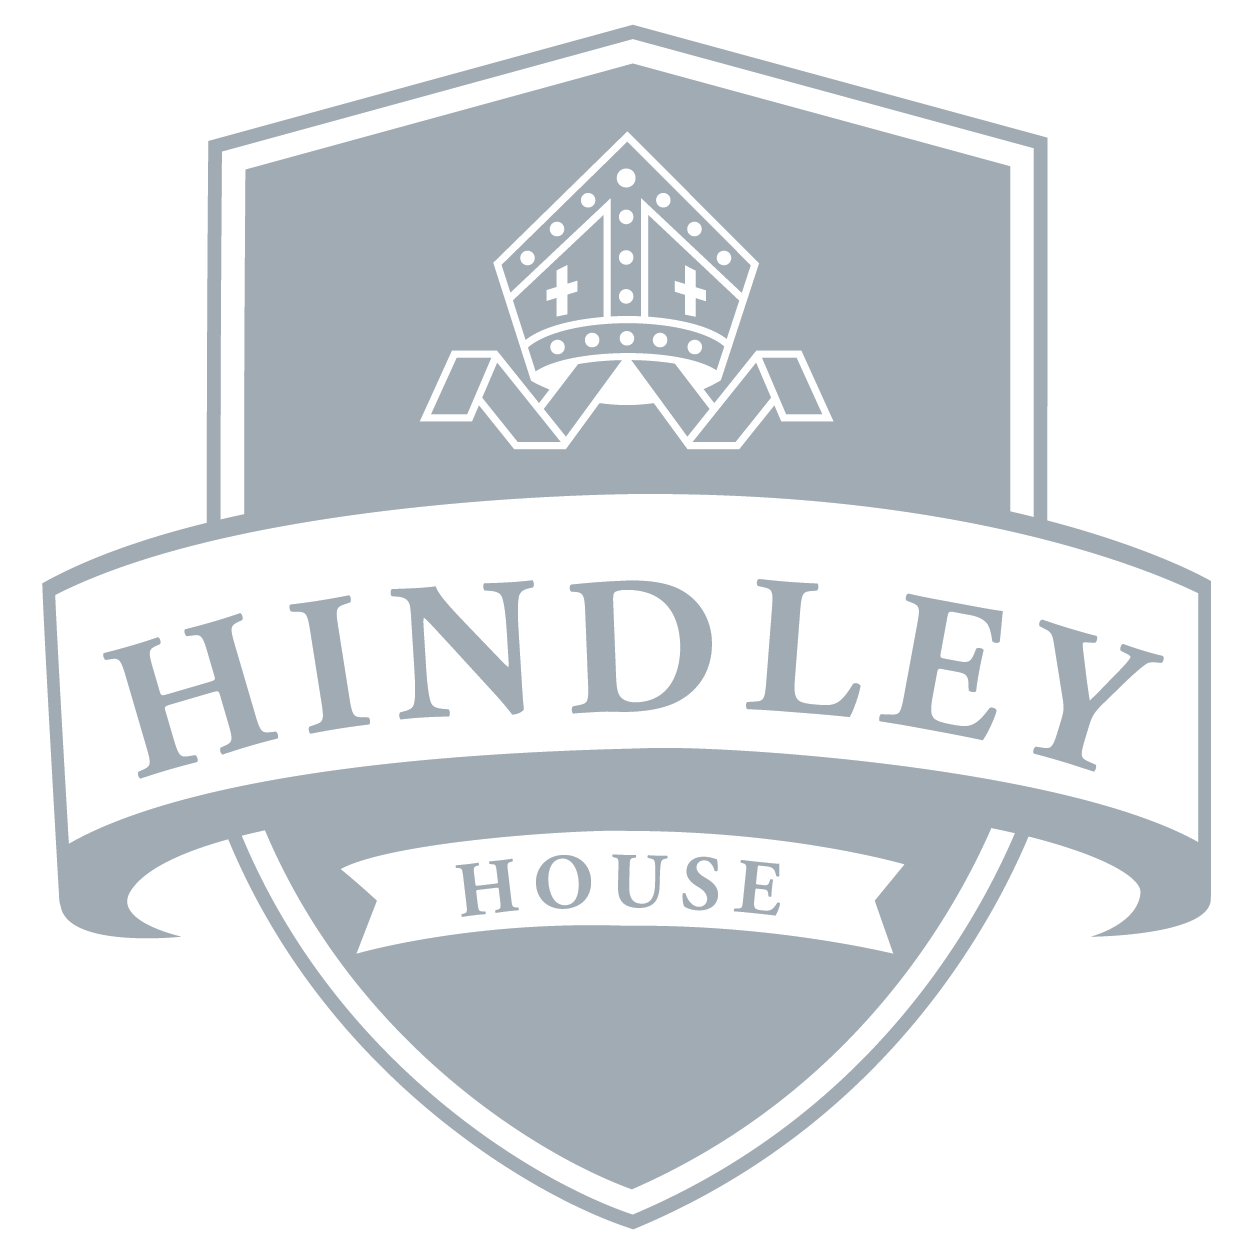 Hindley House Logo-01